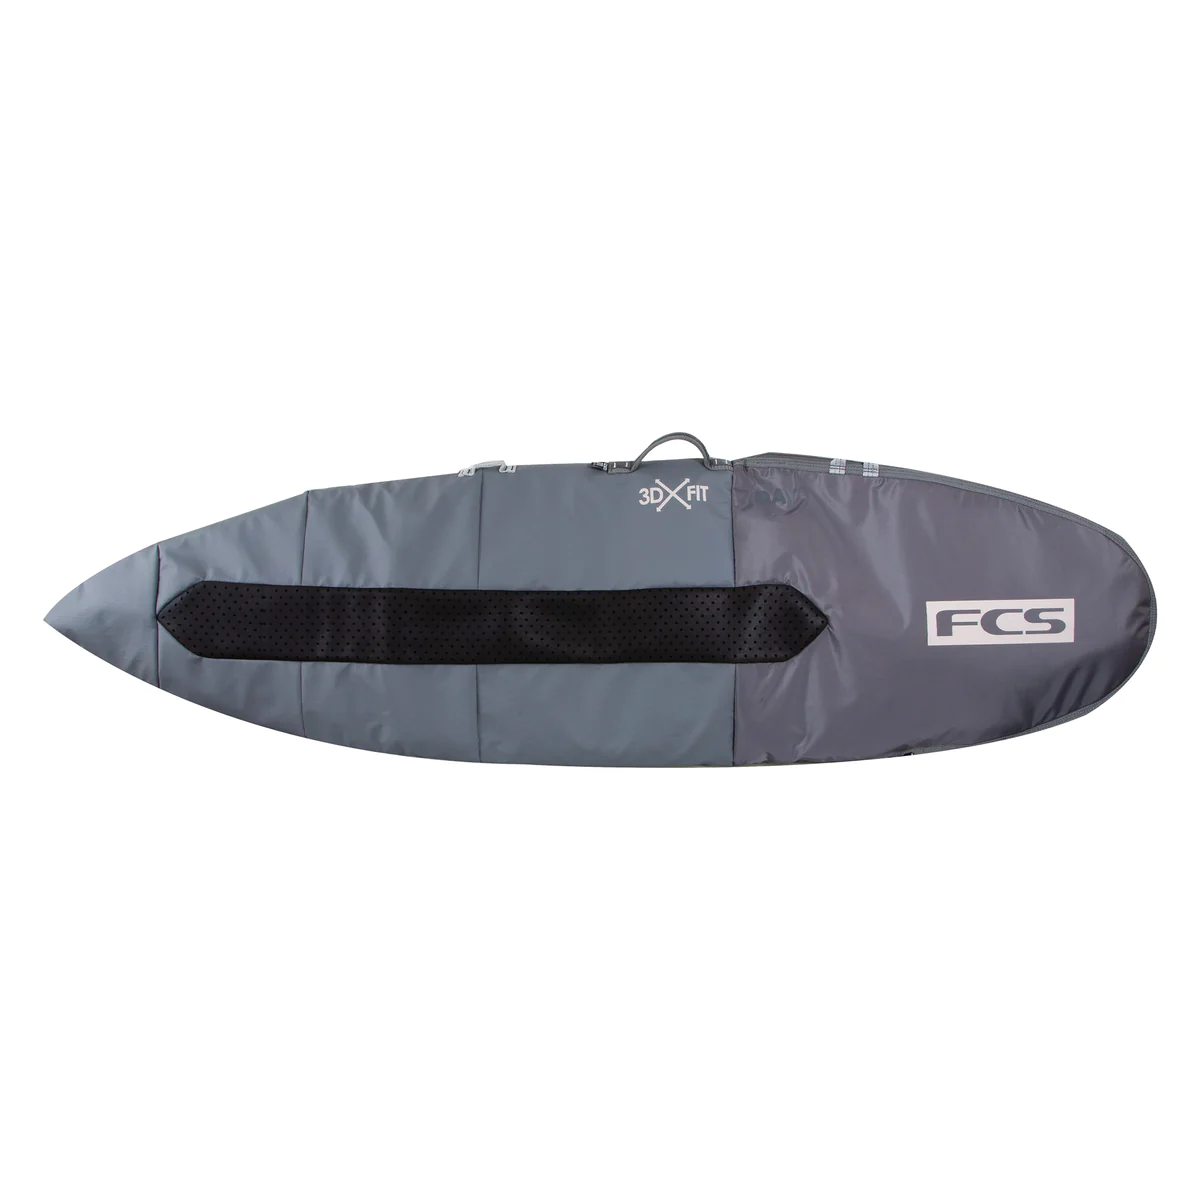 FCS Day All Purpose 6ft 7 Surf Bag - Steel Grey/Warm Grey